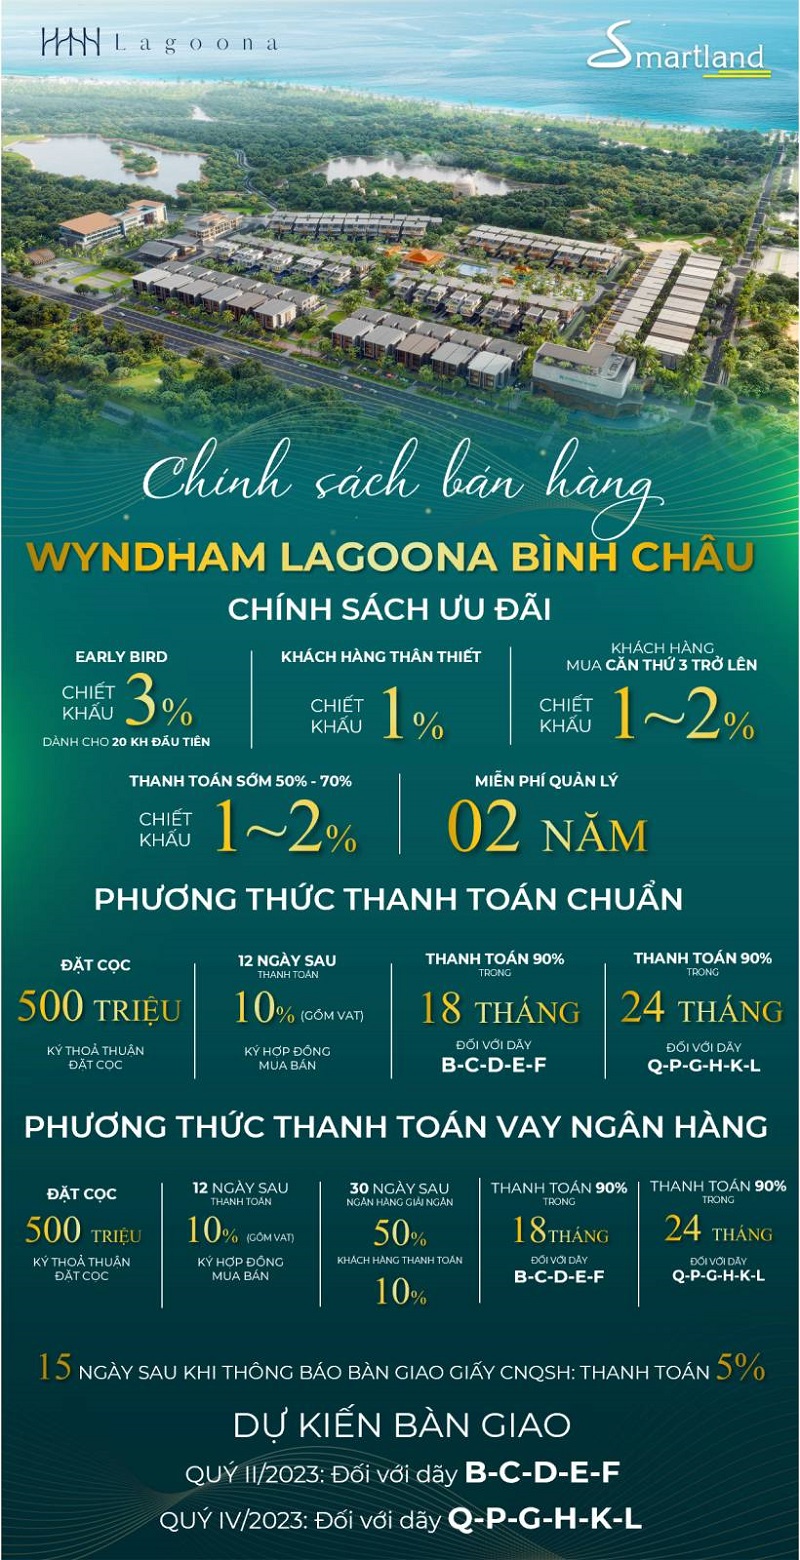 chinh-sach-ban-hang-lagoona-binh-chau